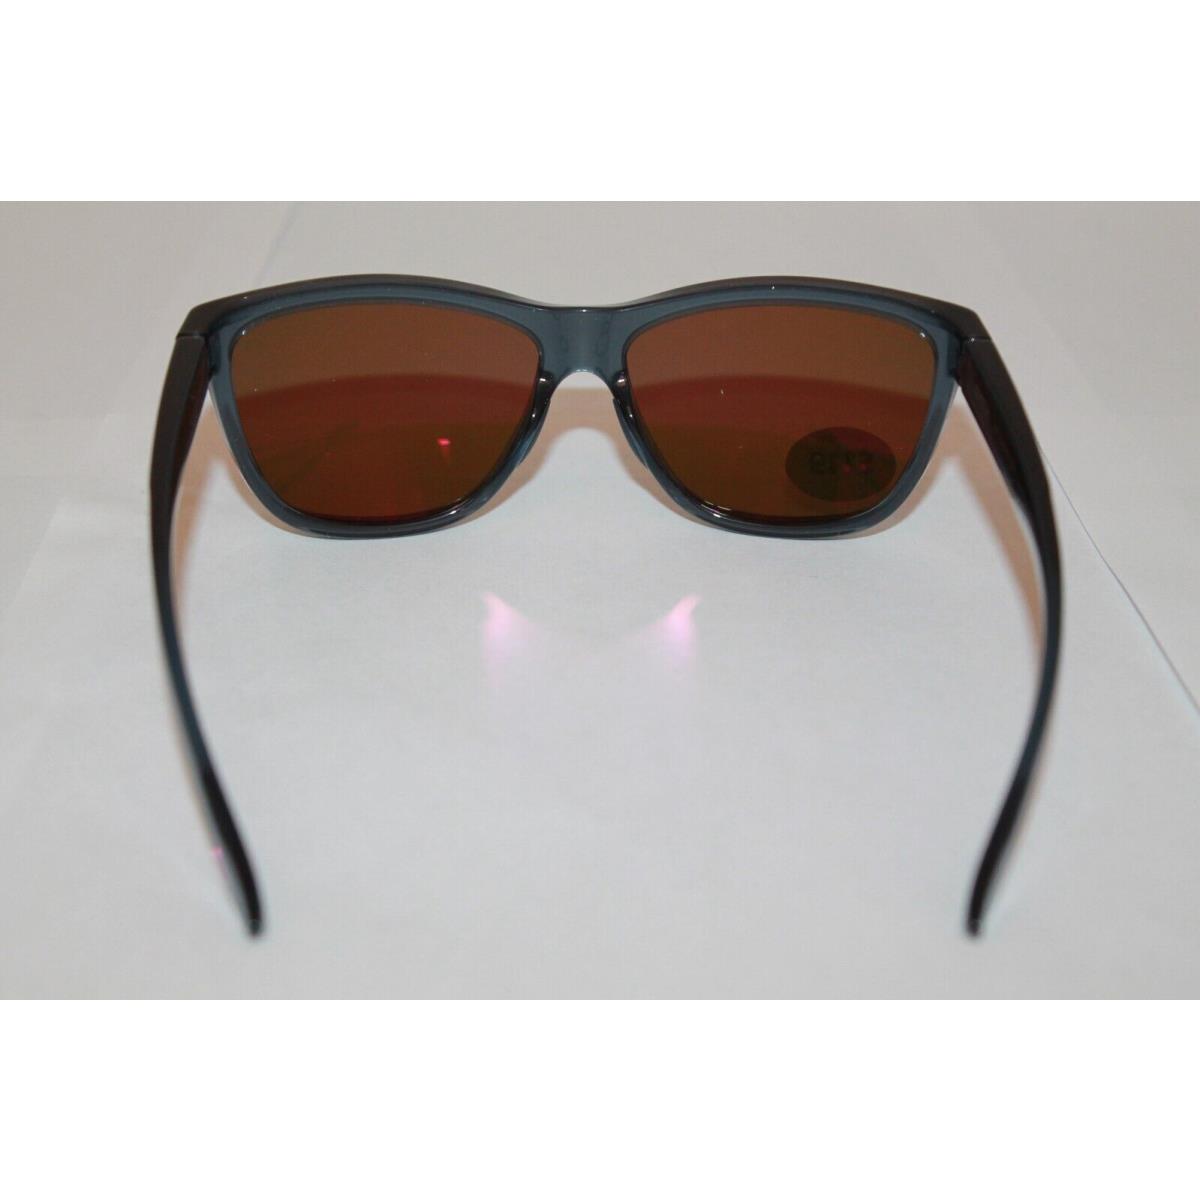 Smith Optics sunglasses ECLIPSESAM - Blue Crystal Frame, CHROMAPOP SUN RED MIRROR Lens